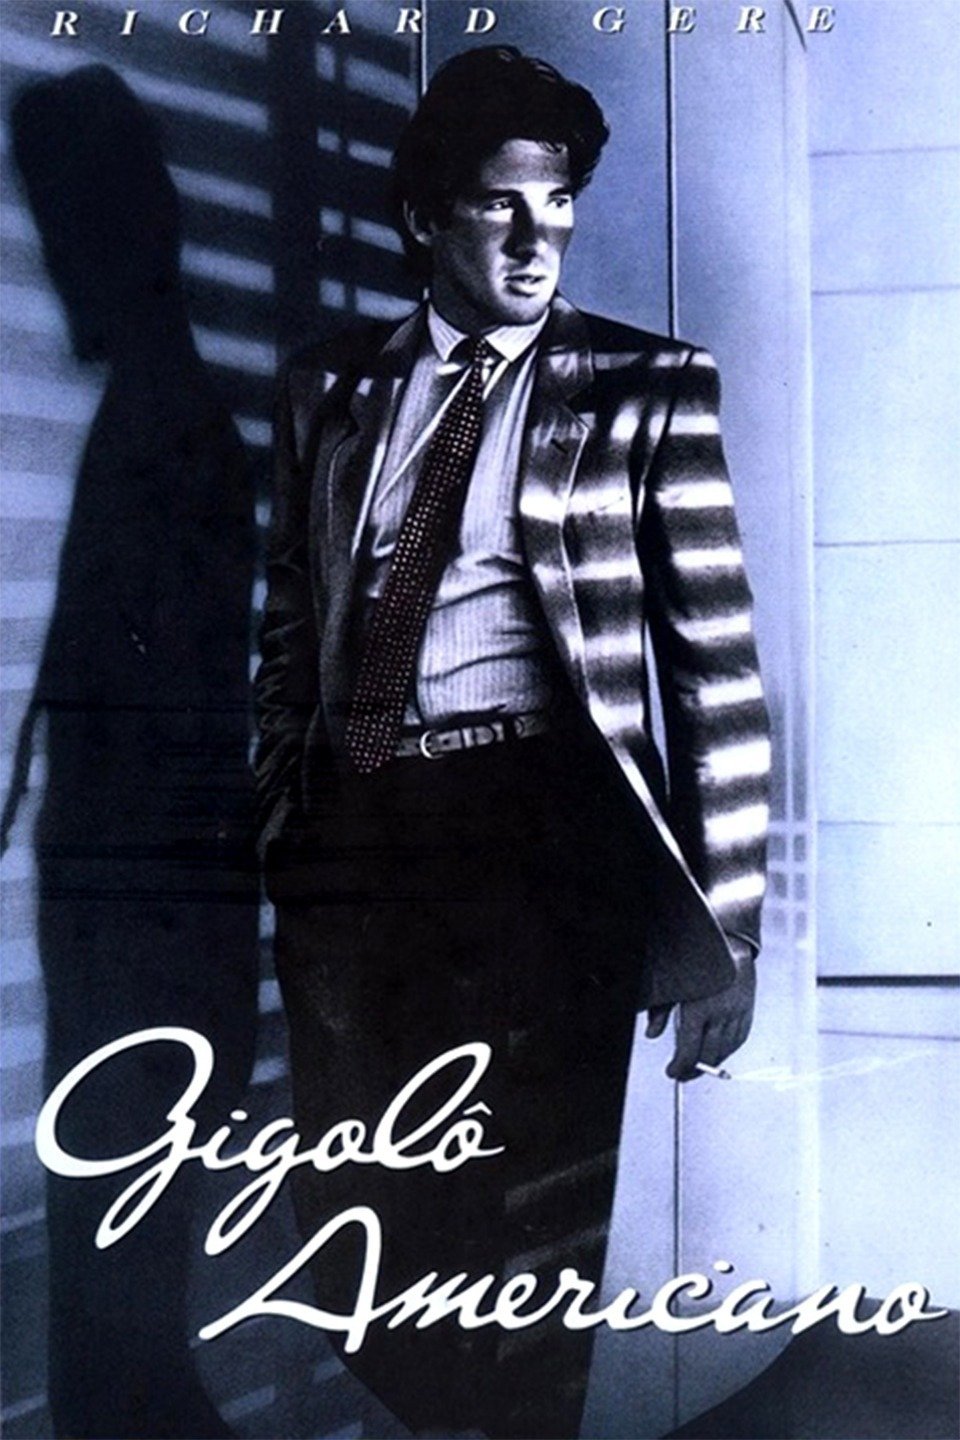 1980 American Gigolo